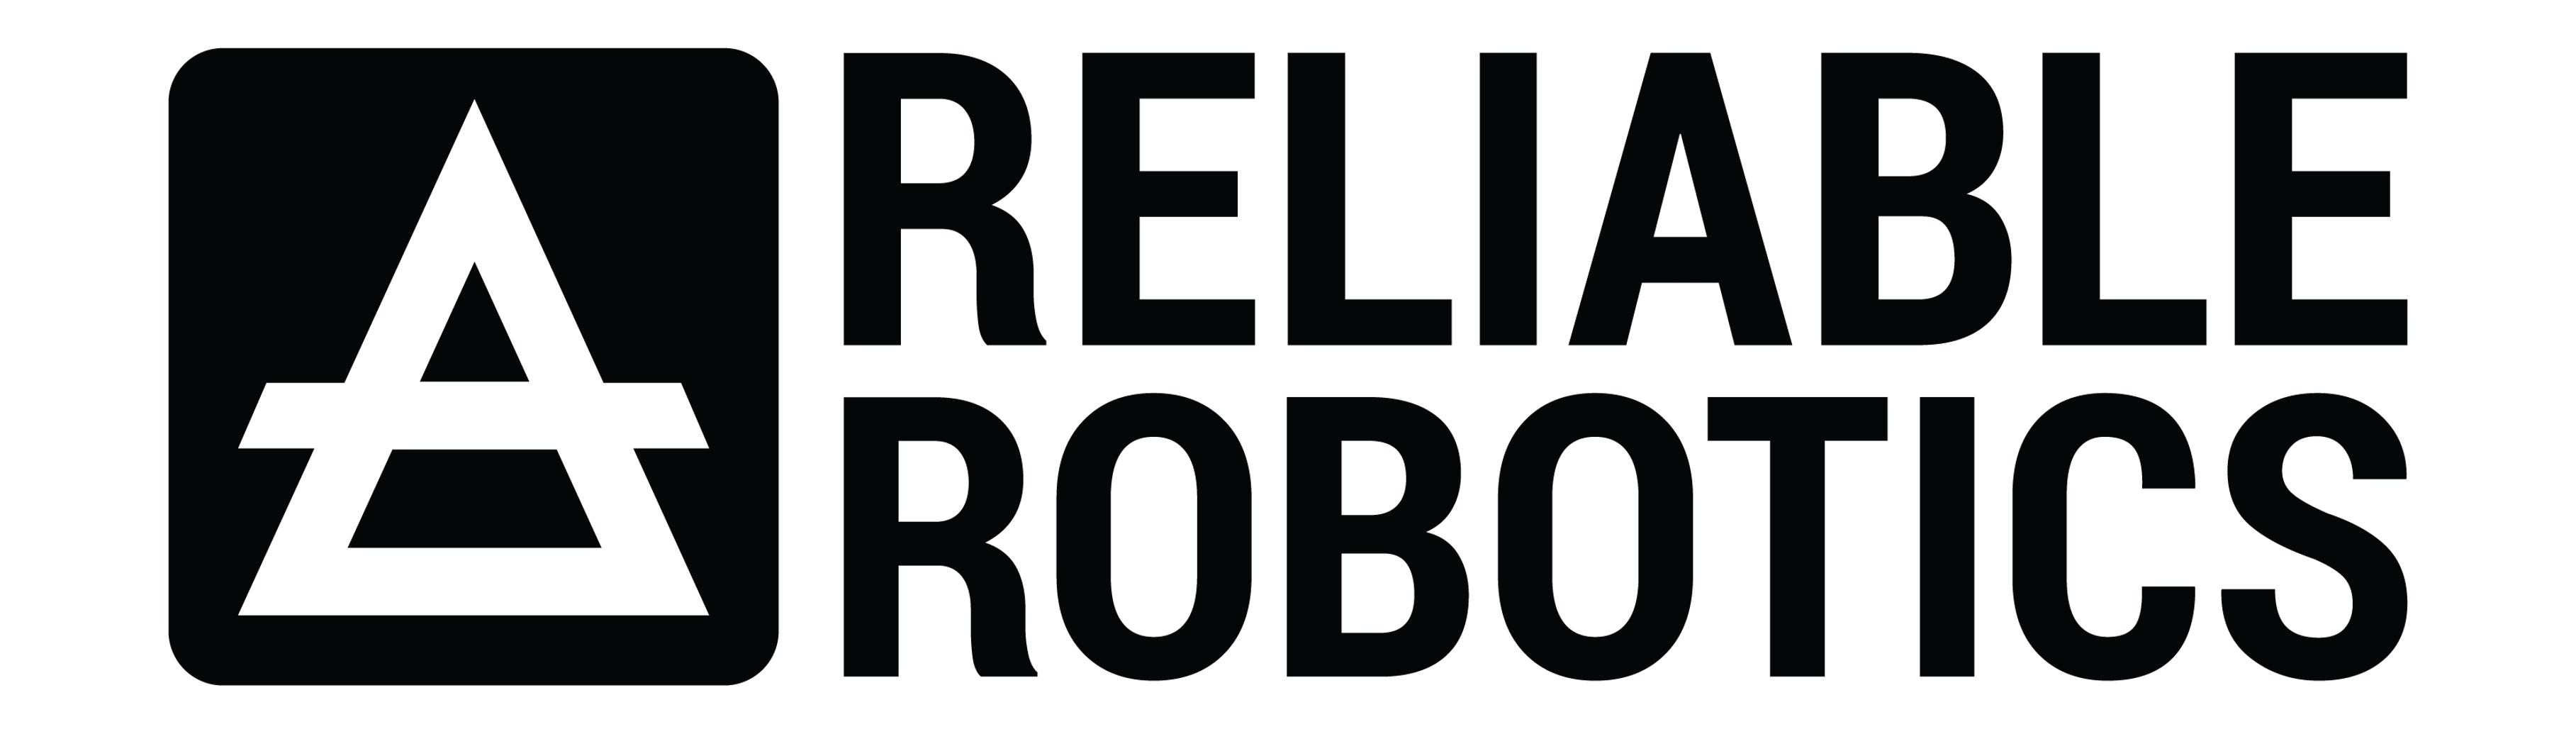 Reliable Robotics Corp.